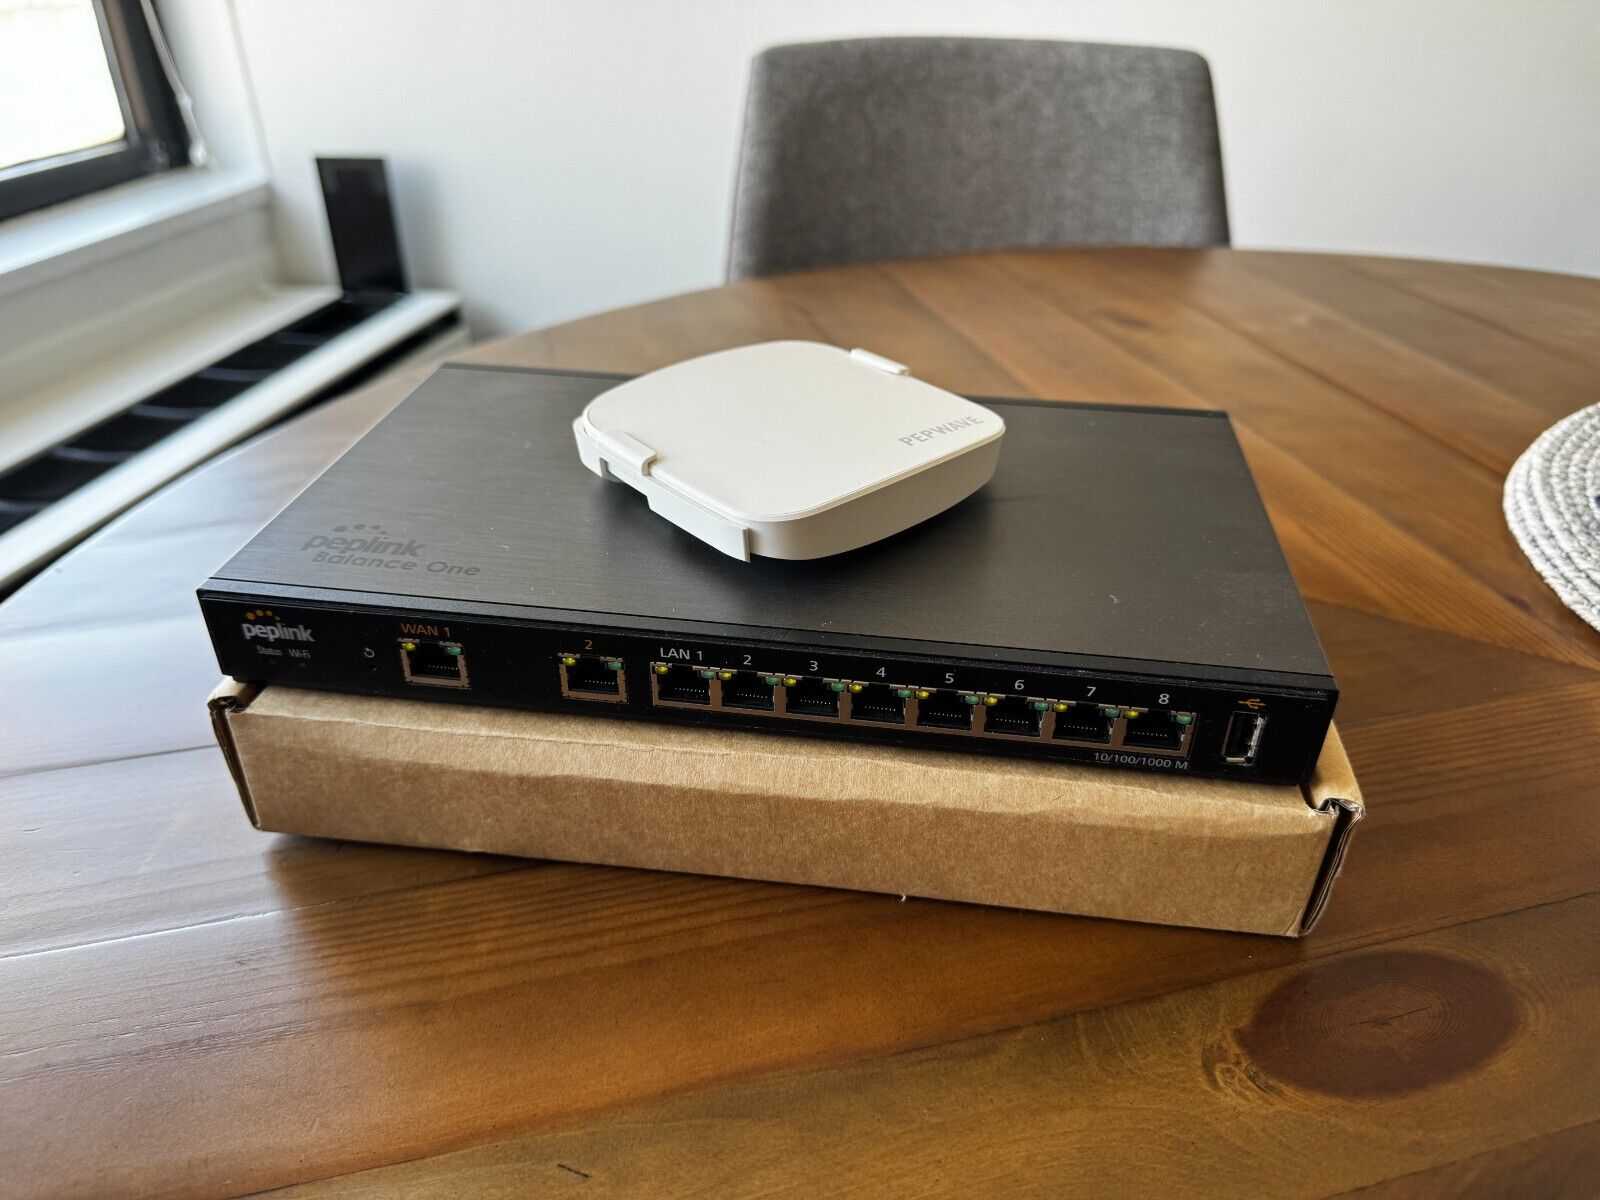 Peplink Balance One Core Dual WAN Router + AP One Mini